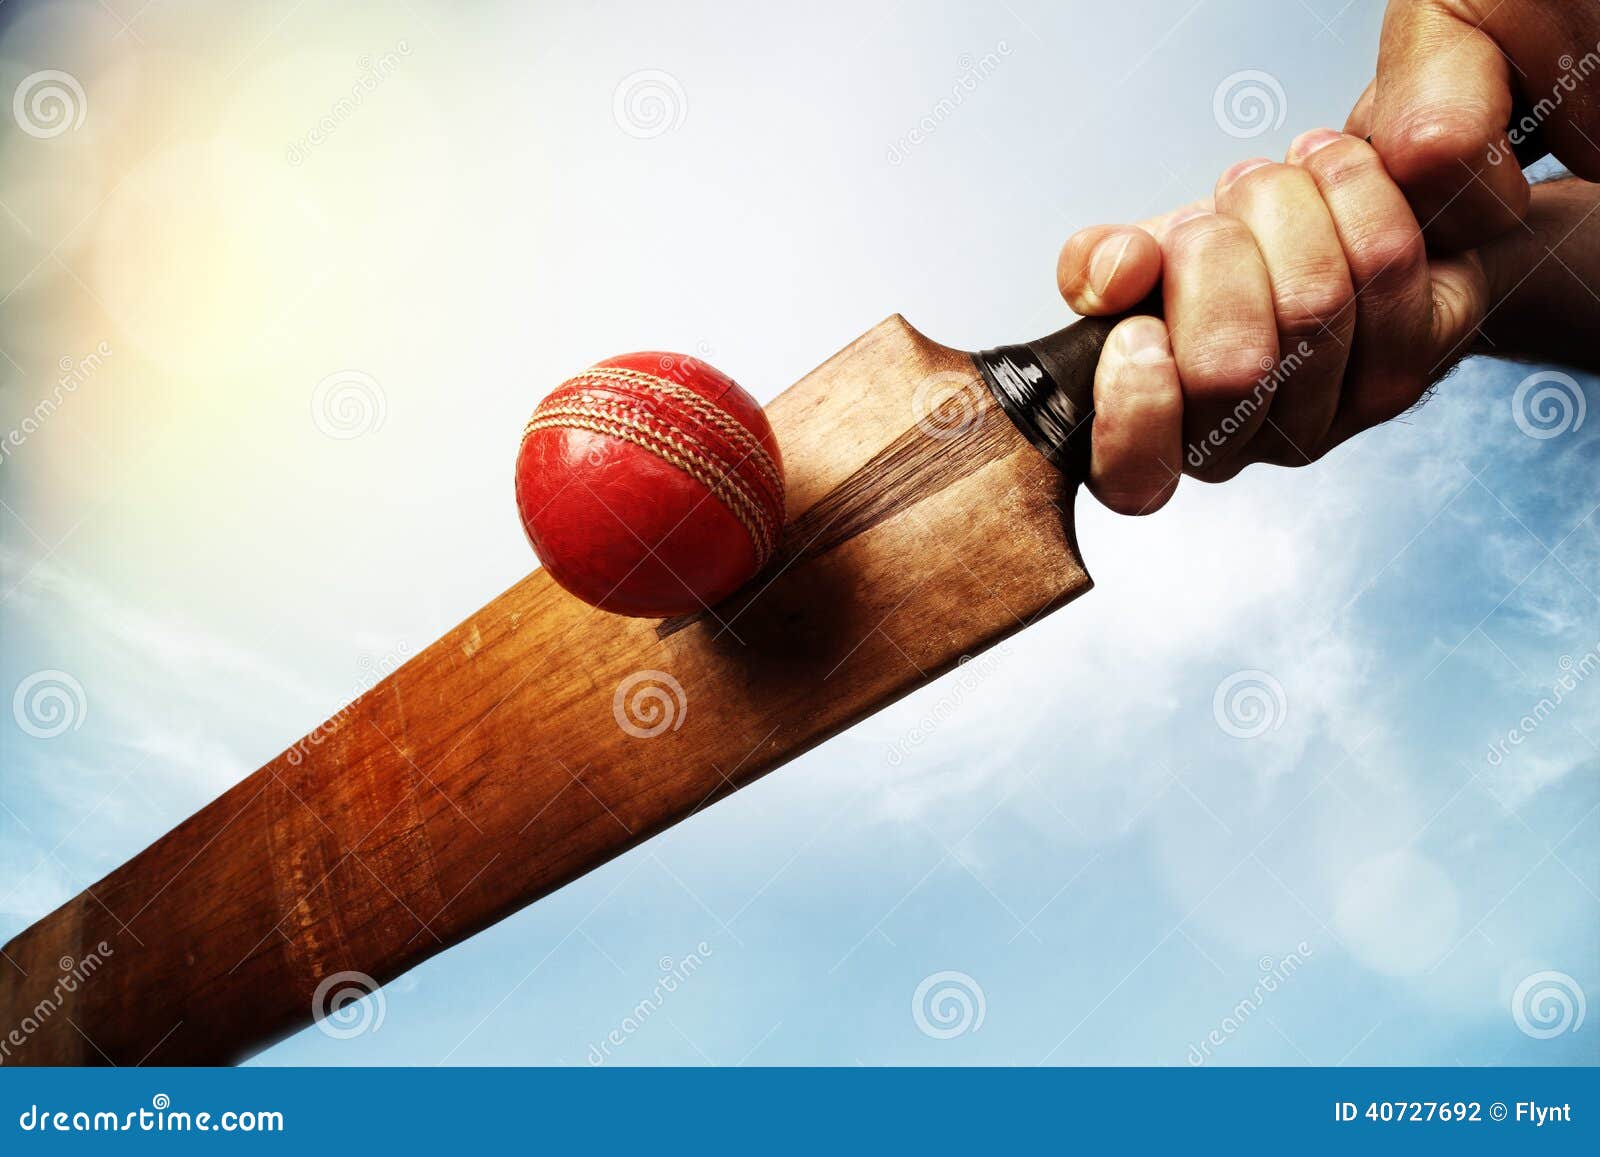 cricket player hitting ball